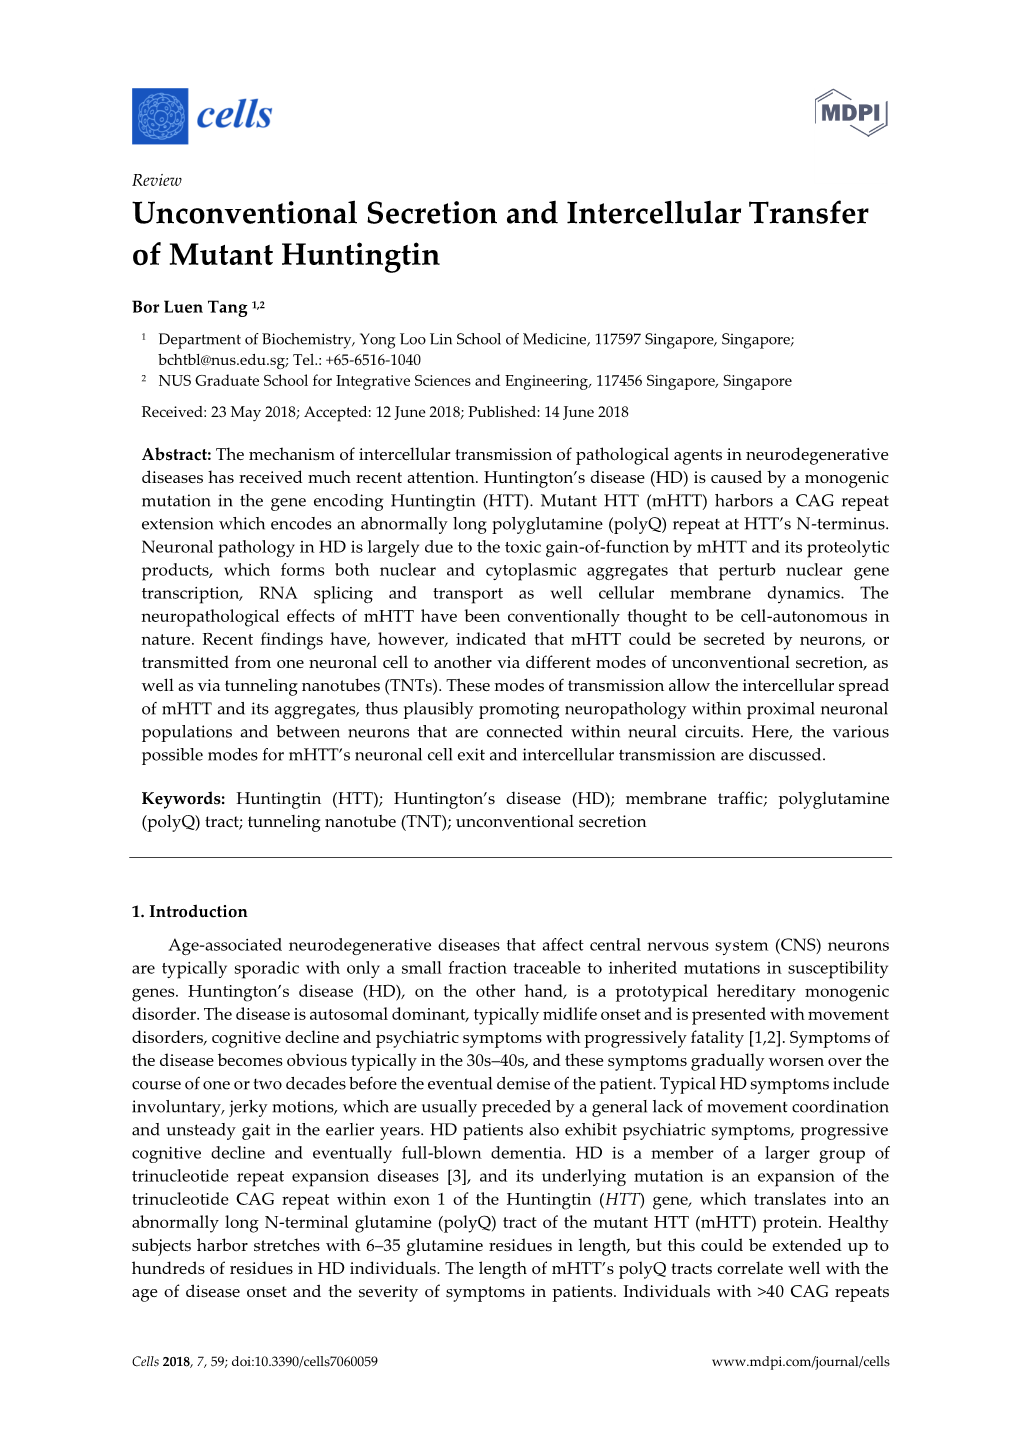 Unconventional Secretion and Intercellular Transfer of Mutant Huntingtin